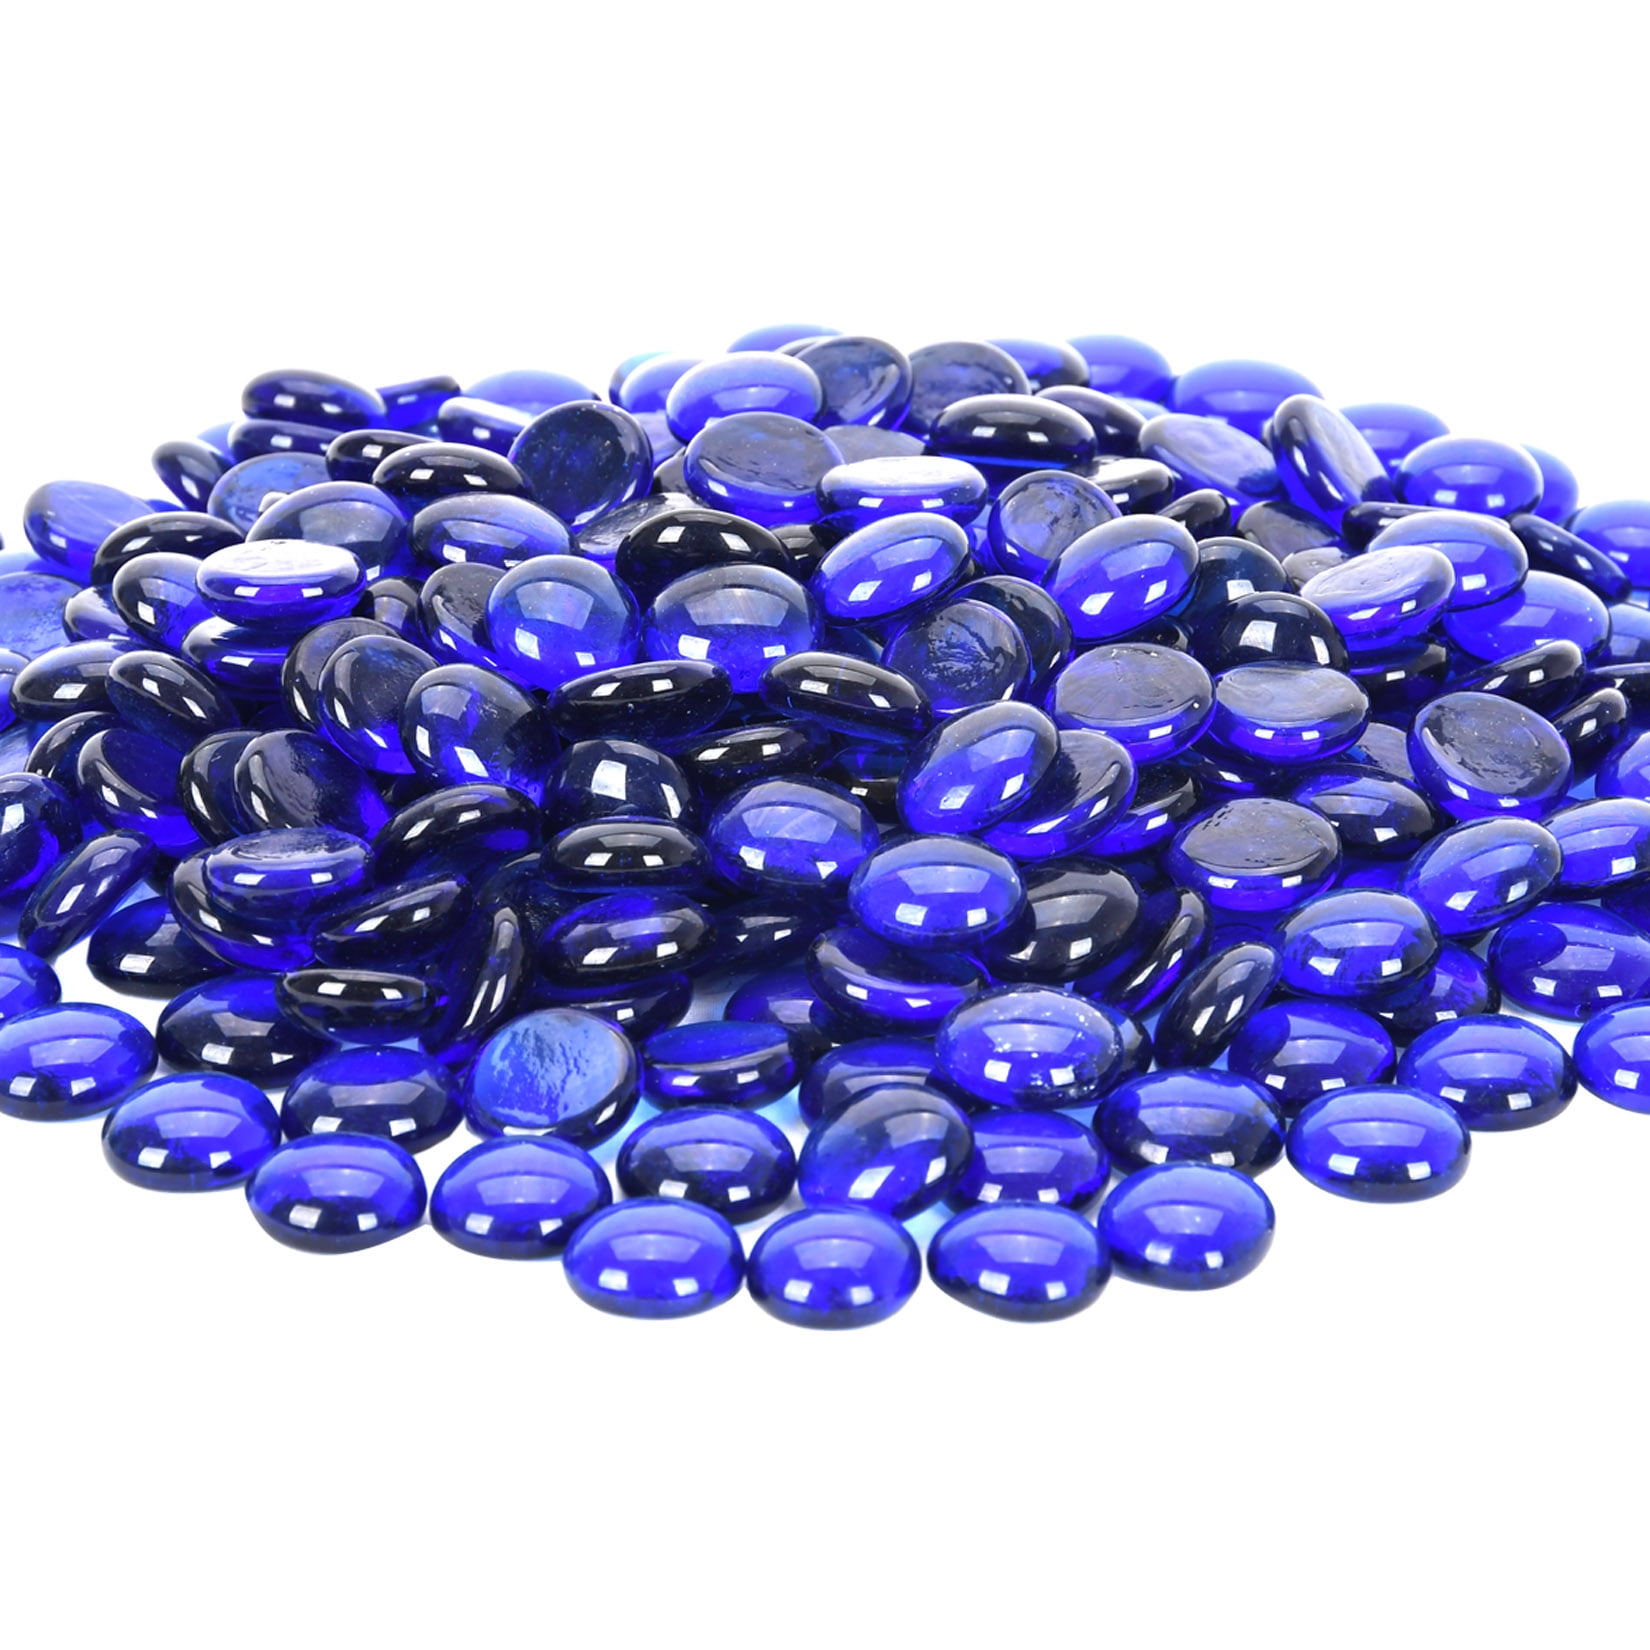 Flat Glass Marbles - Cobalt Blue (Bag of 75 marbles)